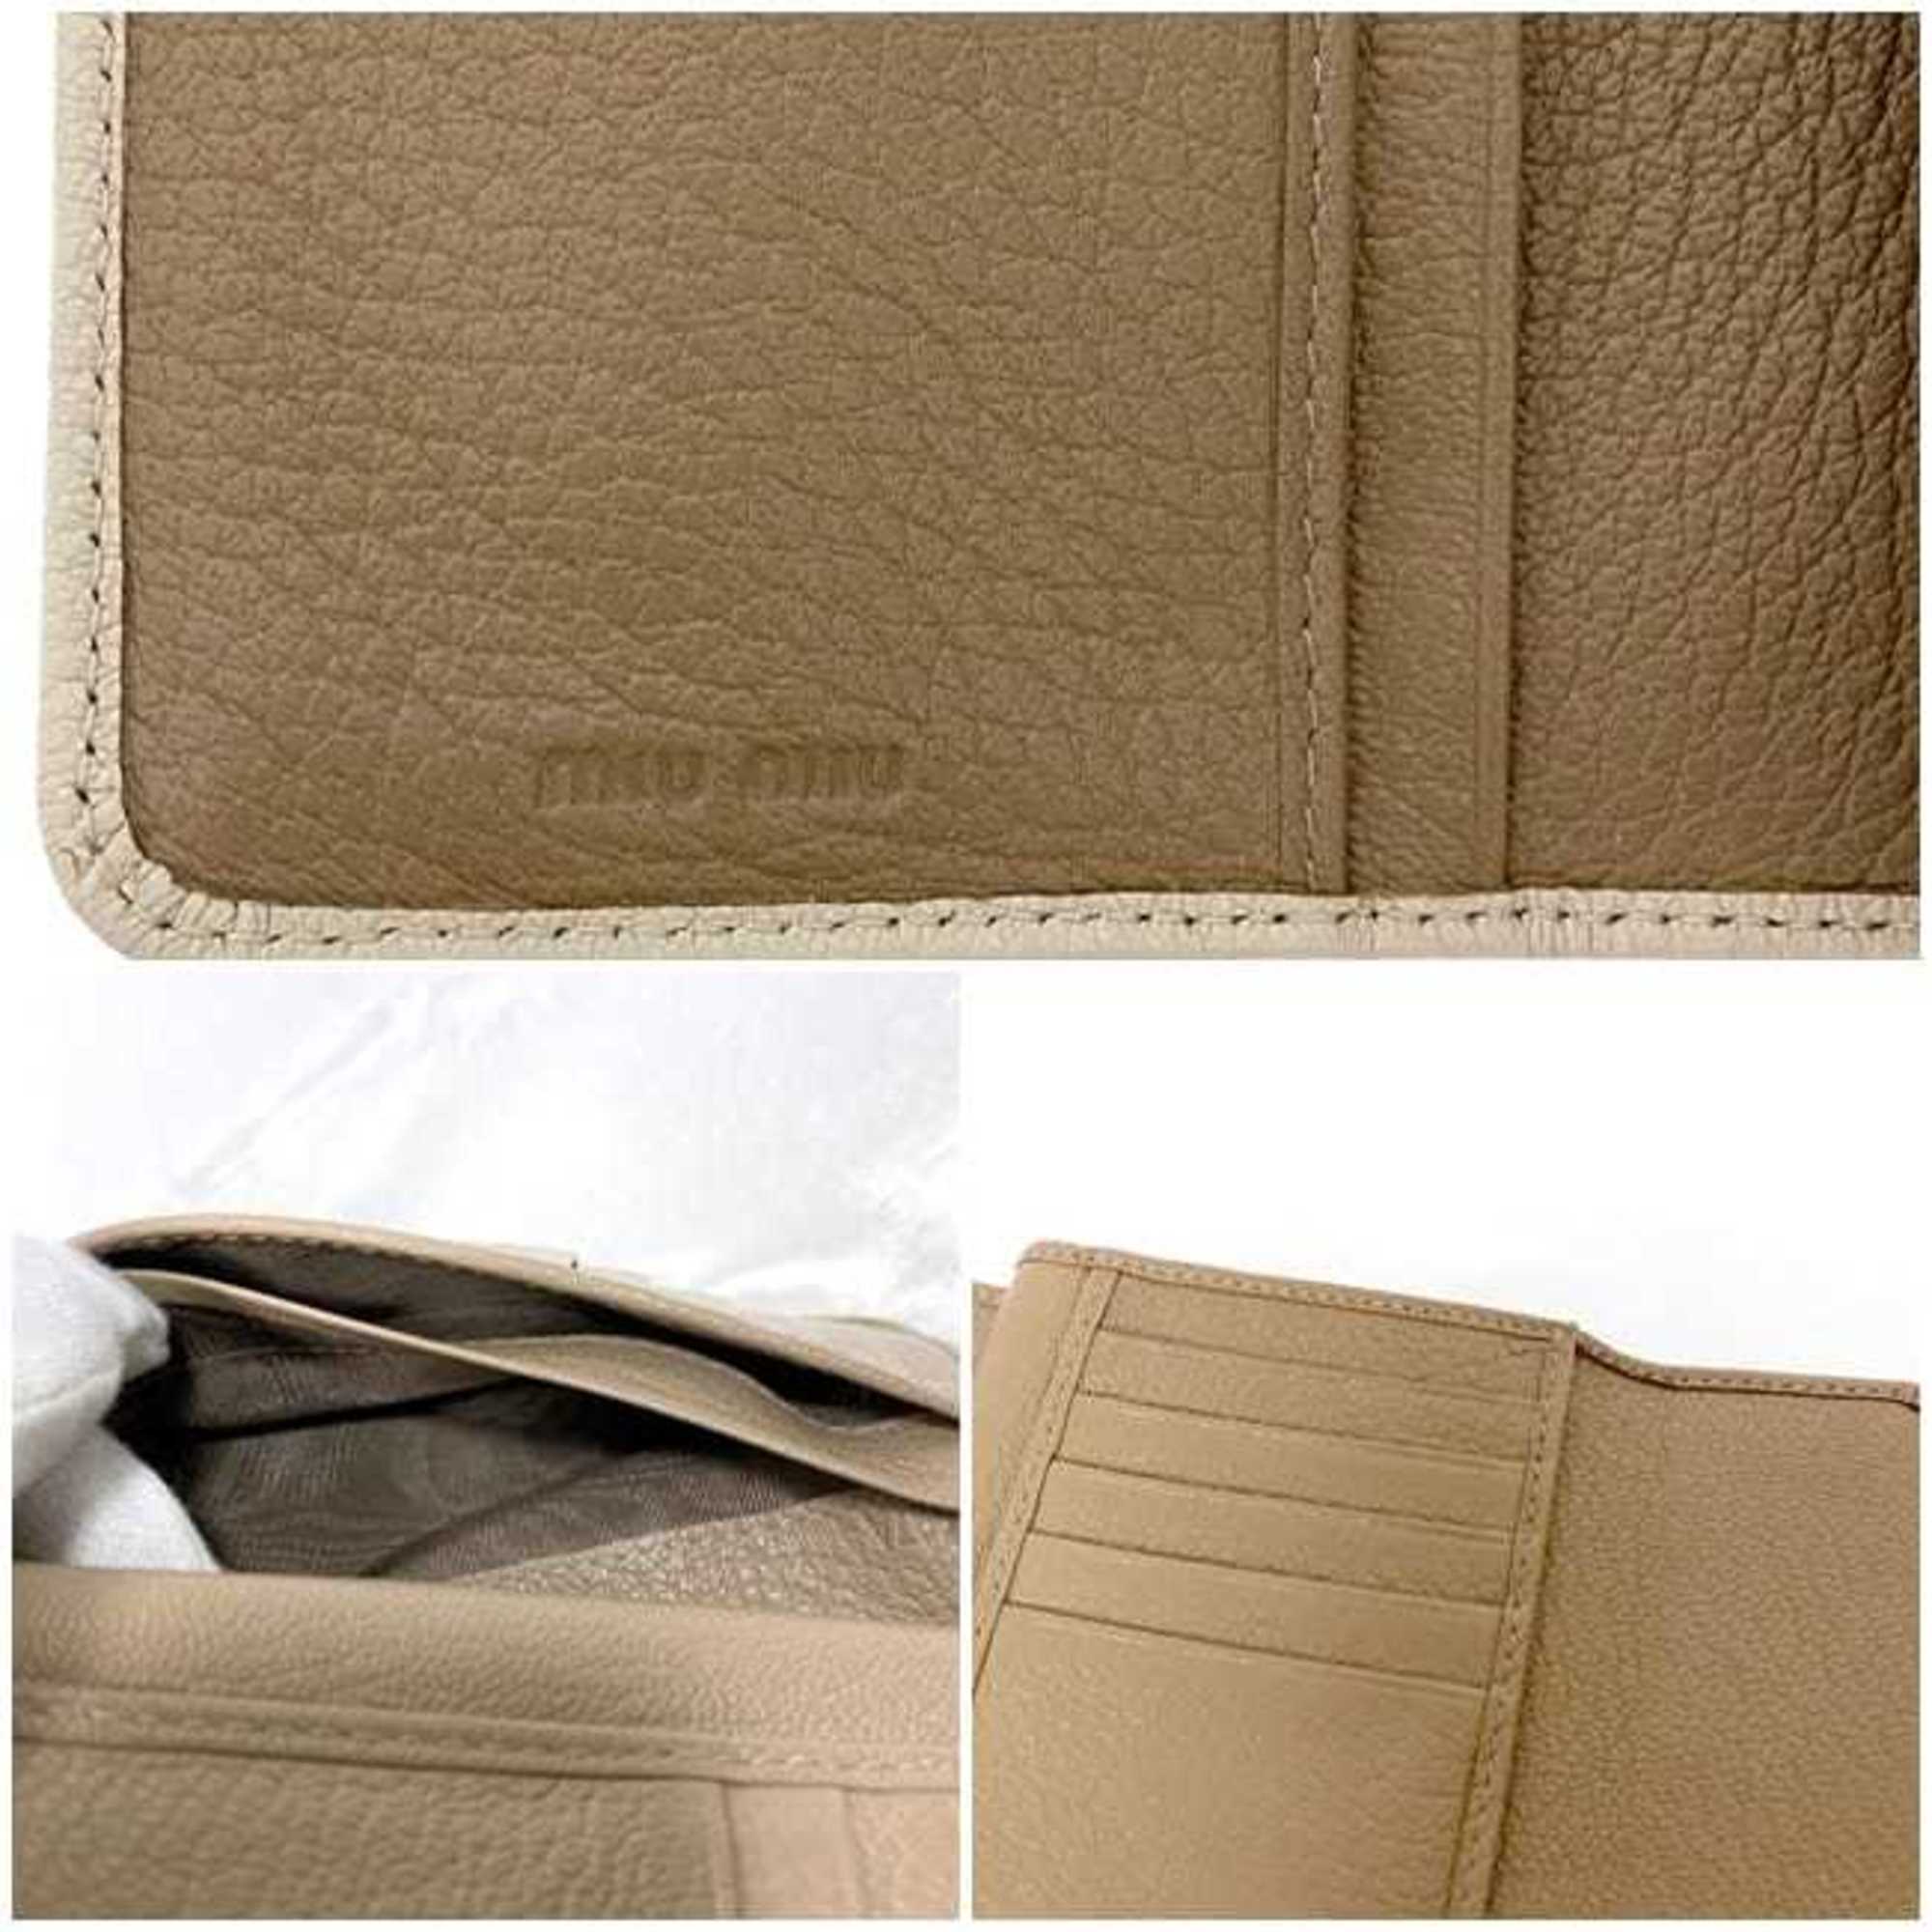 Miu Miu Miu Trifold Wallet Beige Brown L-shaped Leather miu Bicolor Women's Compact